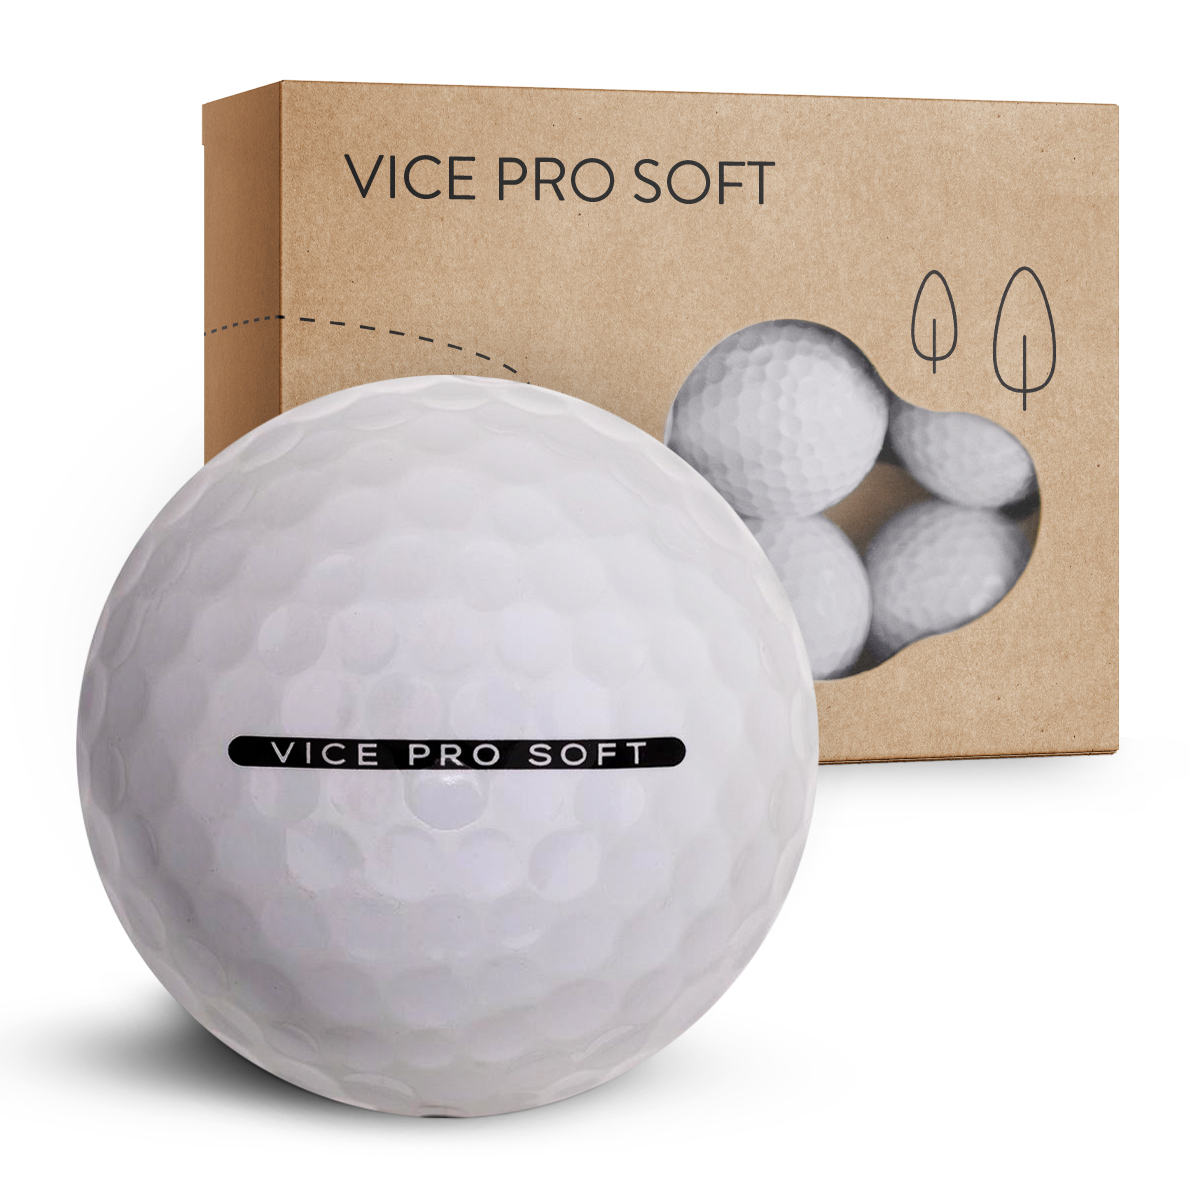 Vice Pro Soft